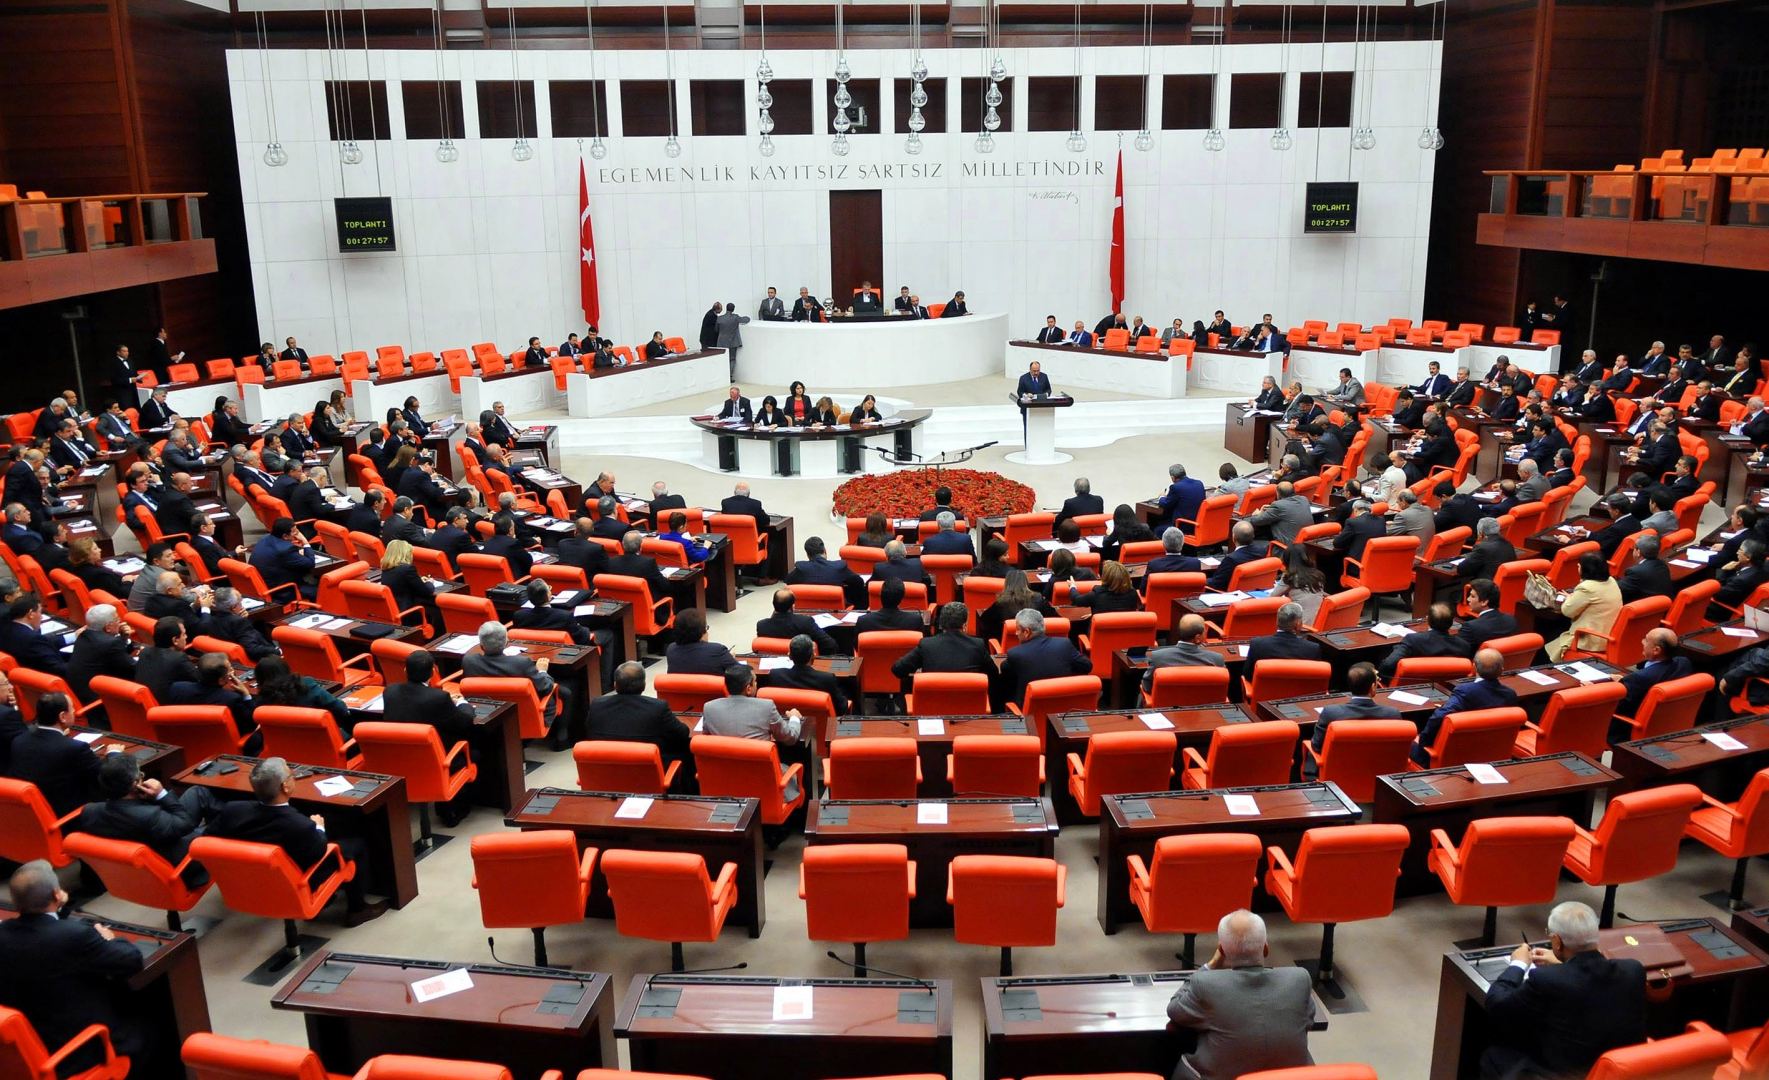 Türkiye announces election date of new parliament chairman